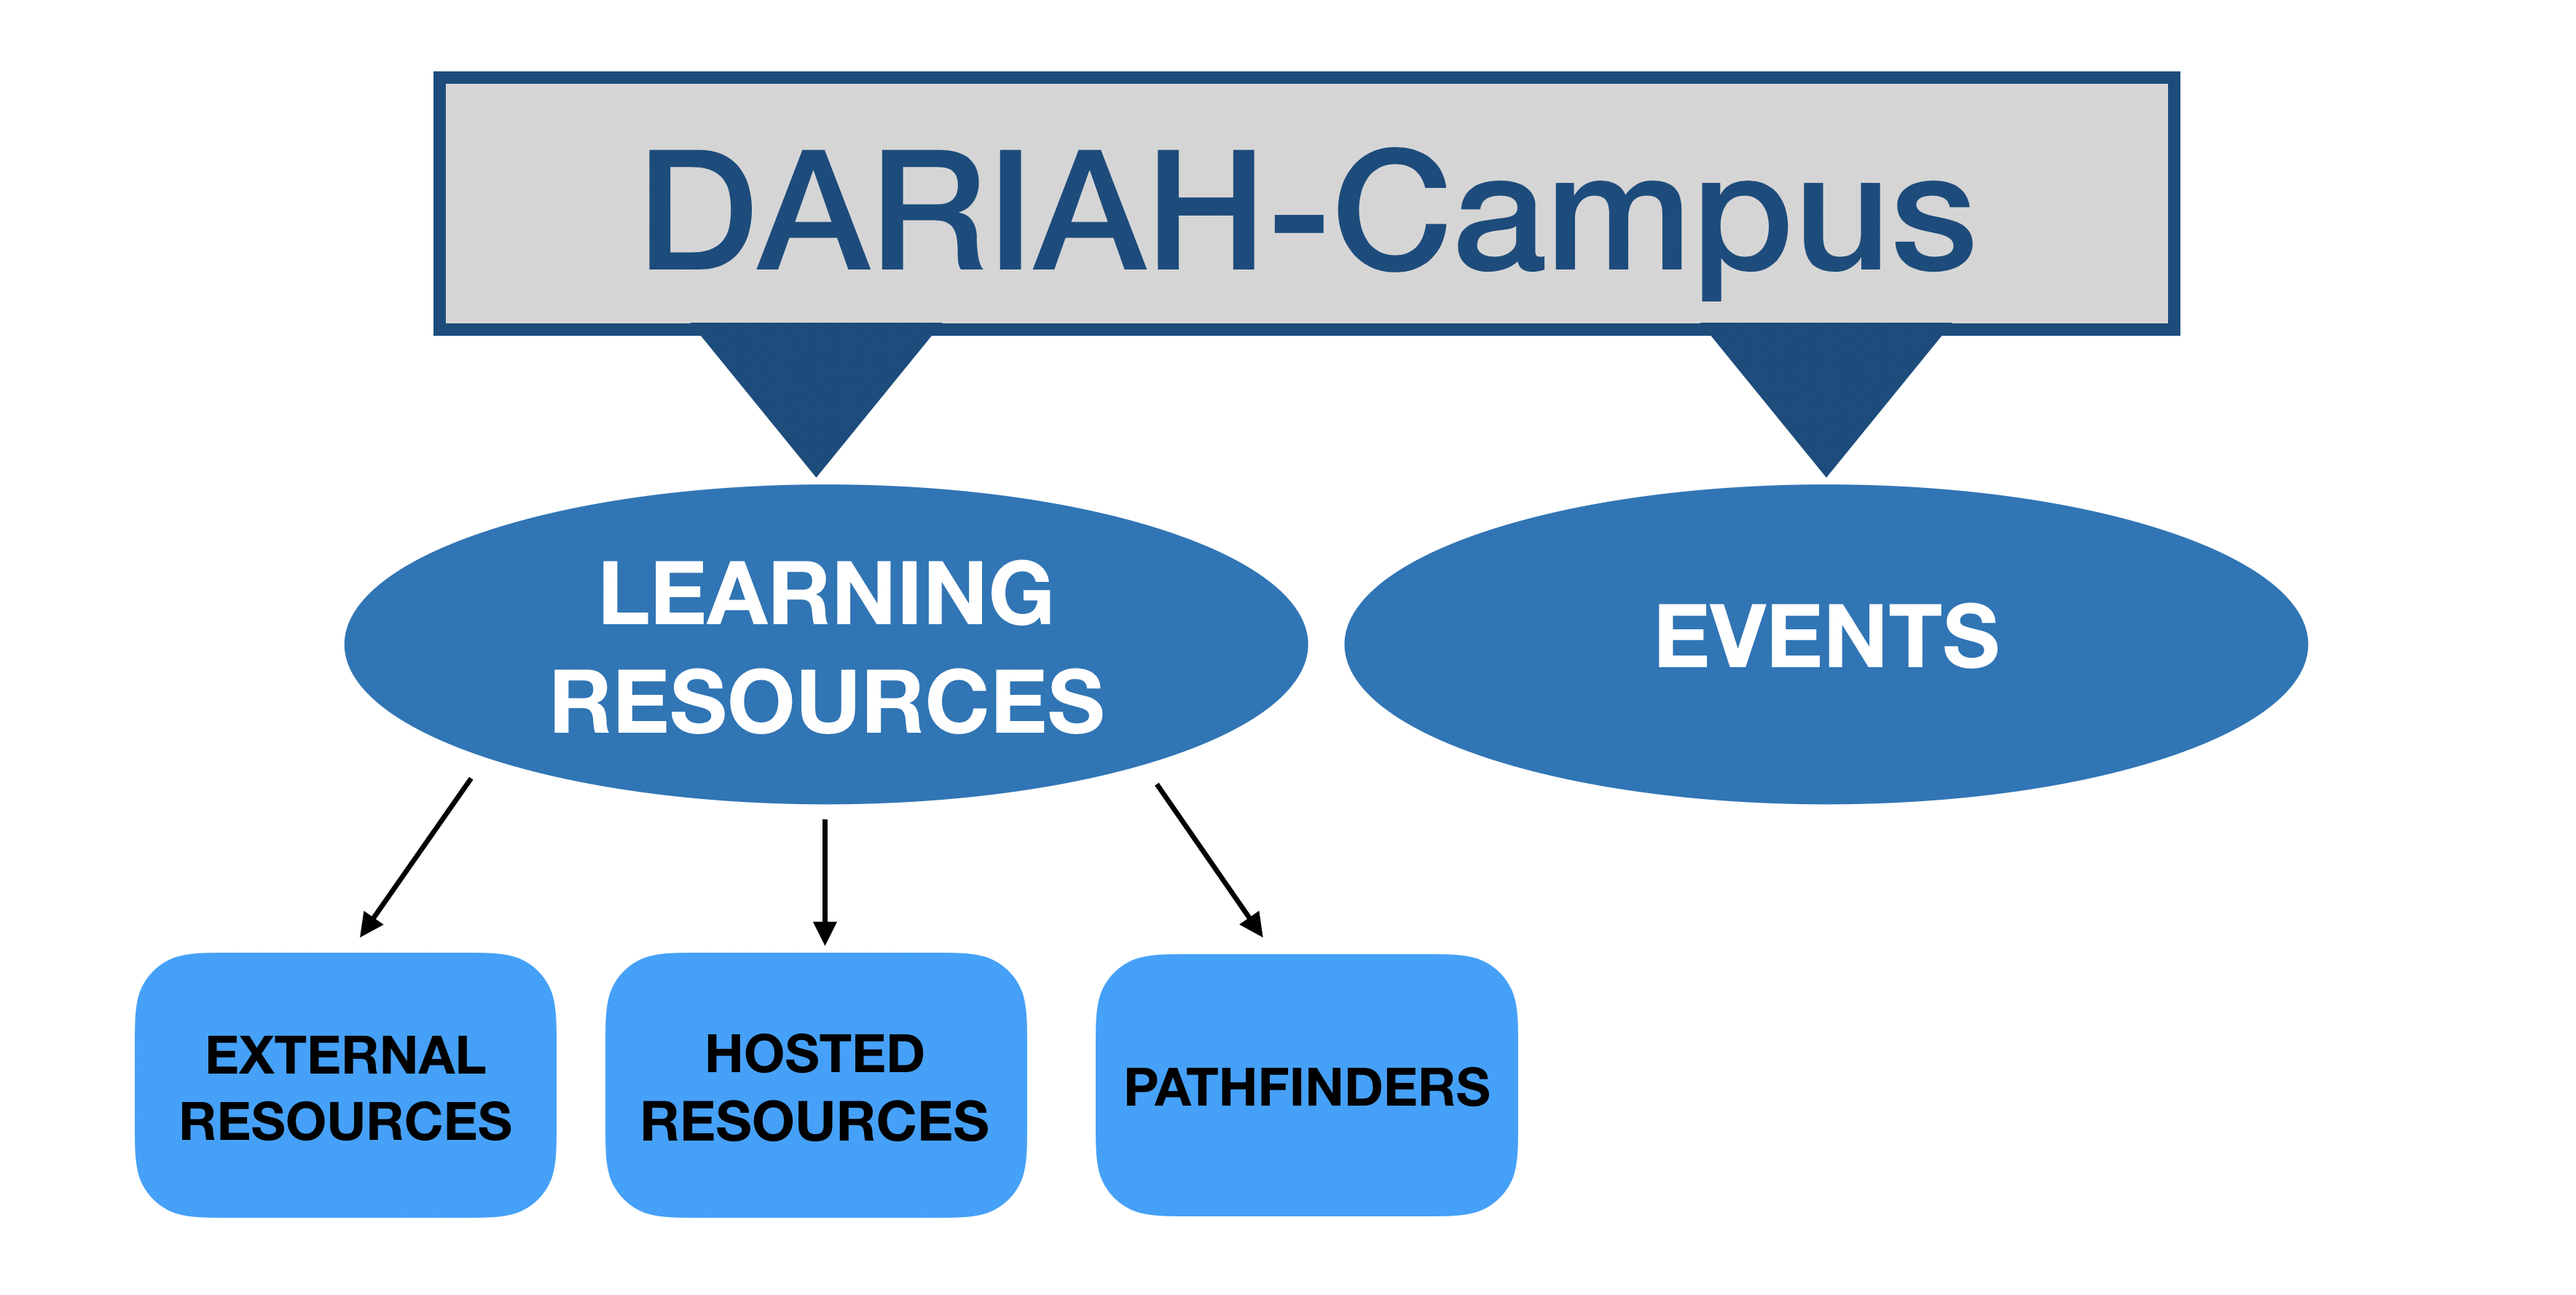 DARIAH-Campus Types of Resources